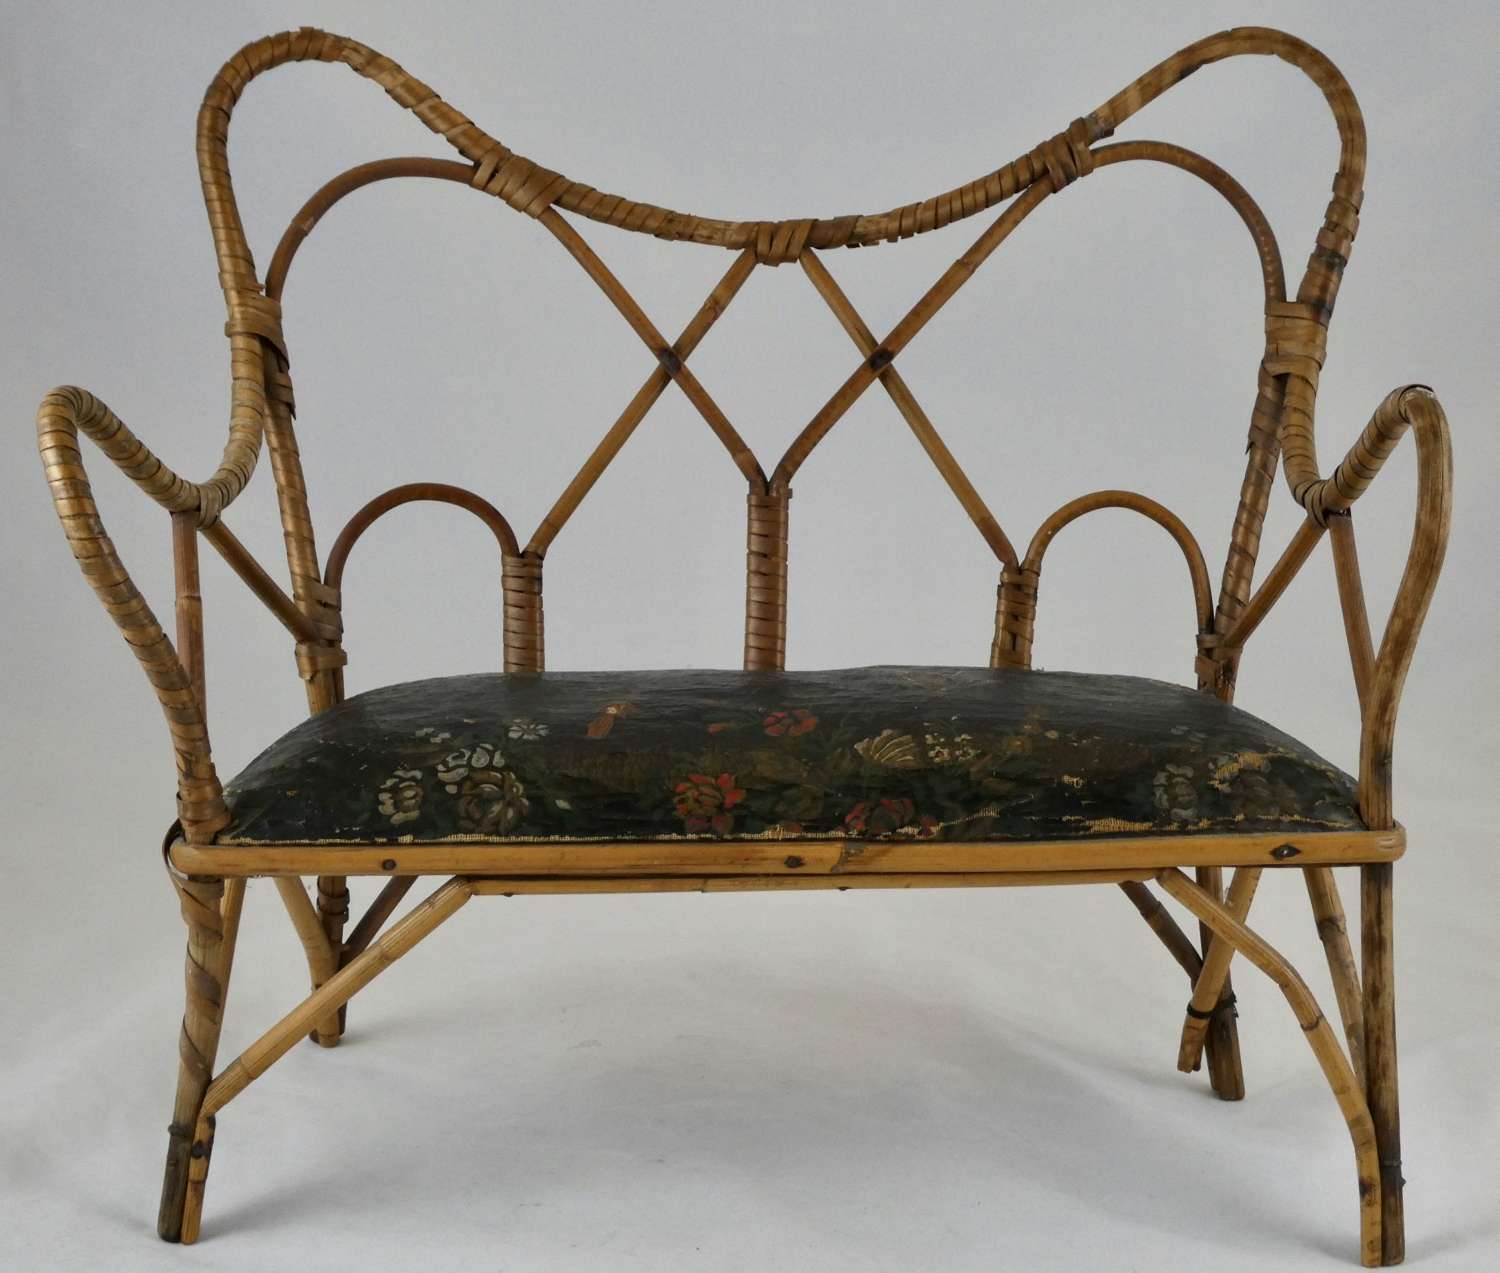 Early 20th century Miniature Wicker Sofa